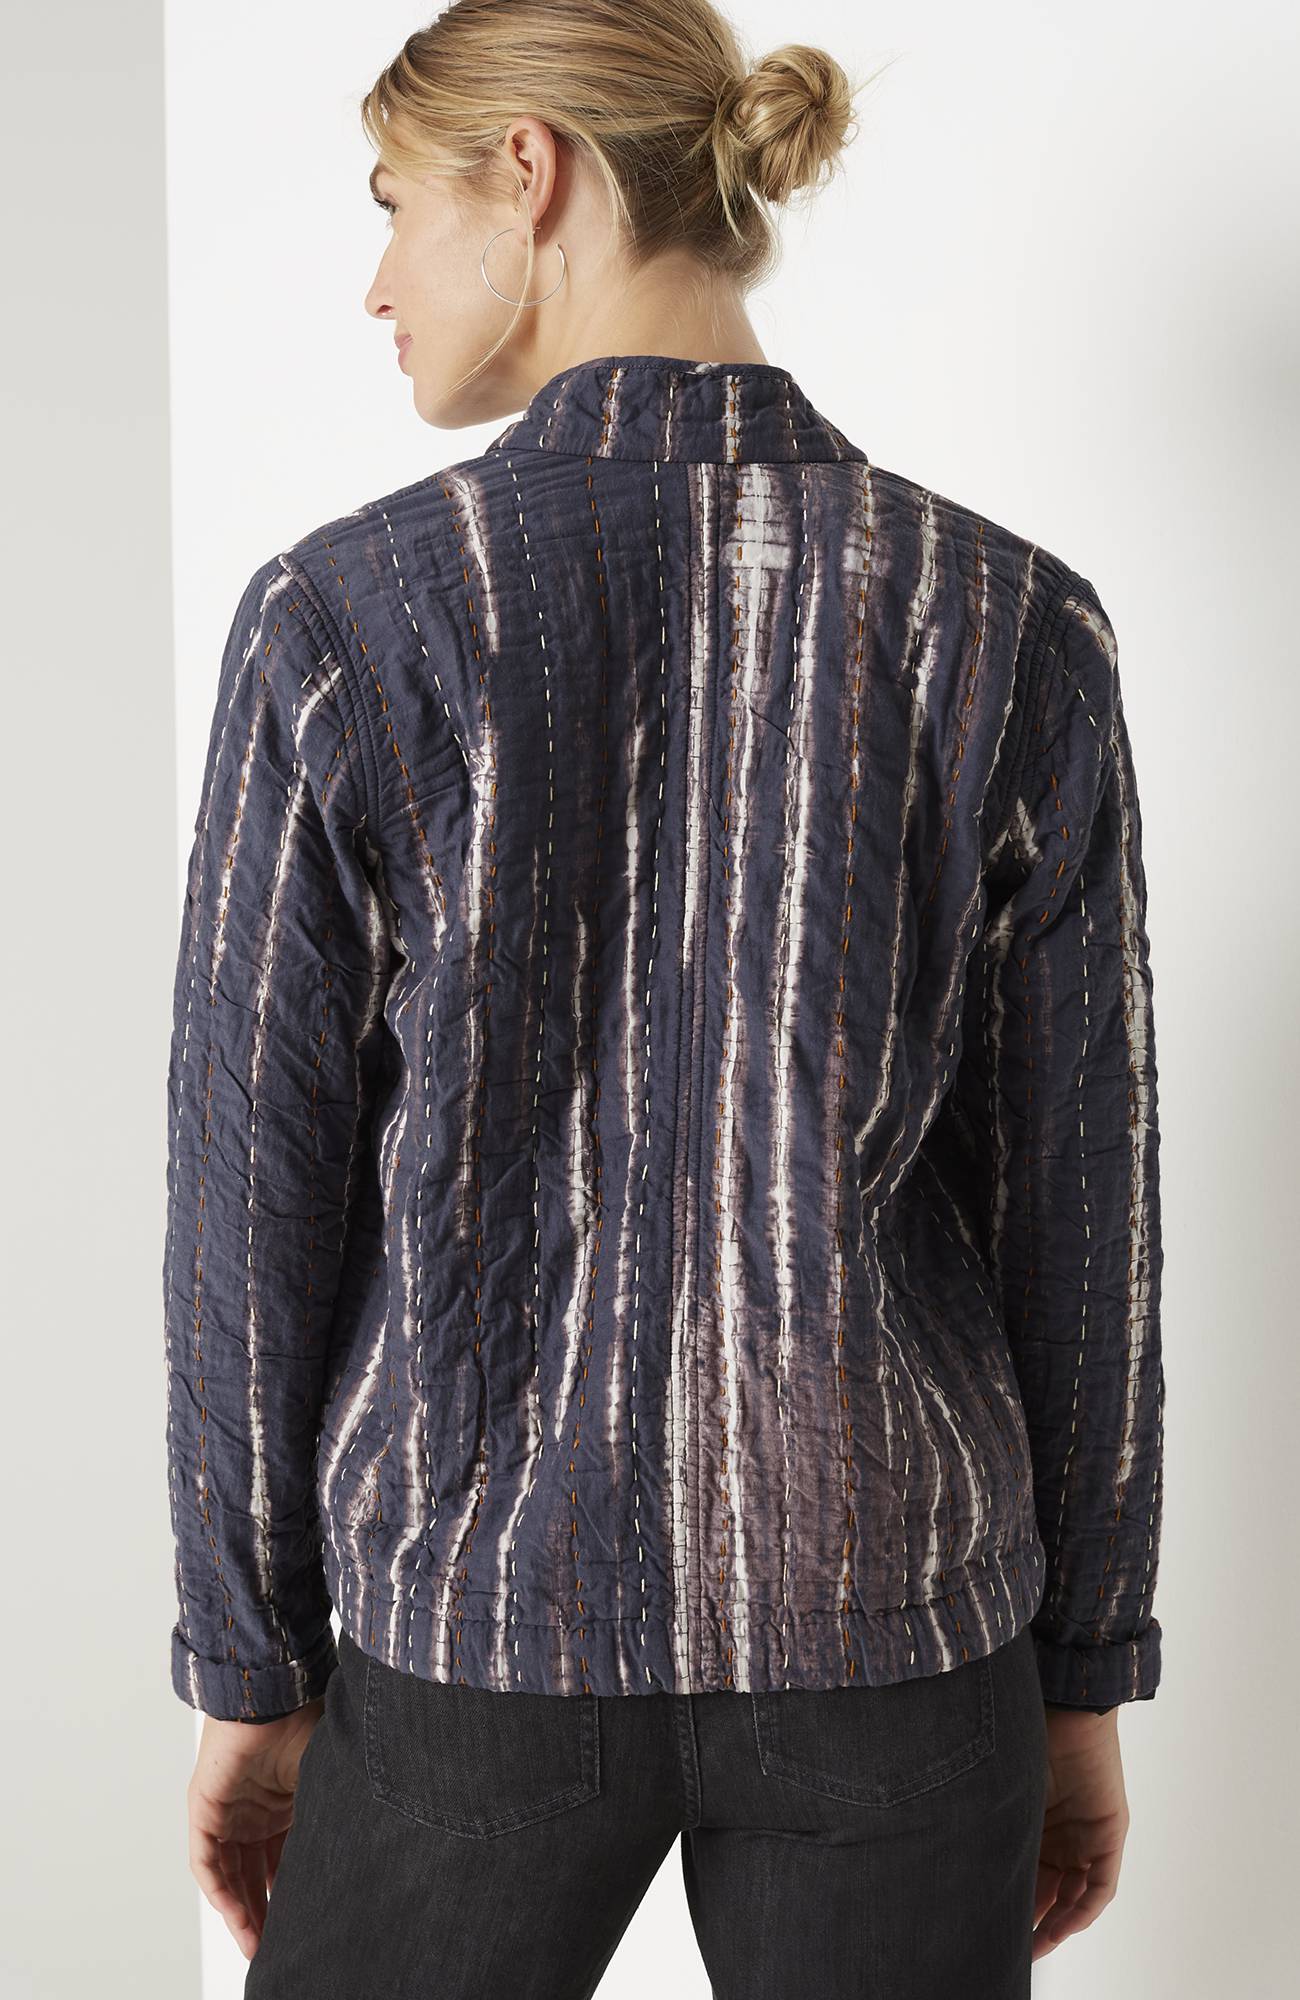 Pure Jill Tie-Dyed Kantha-Stitched Jacket